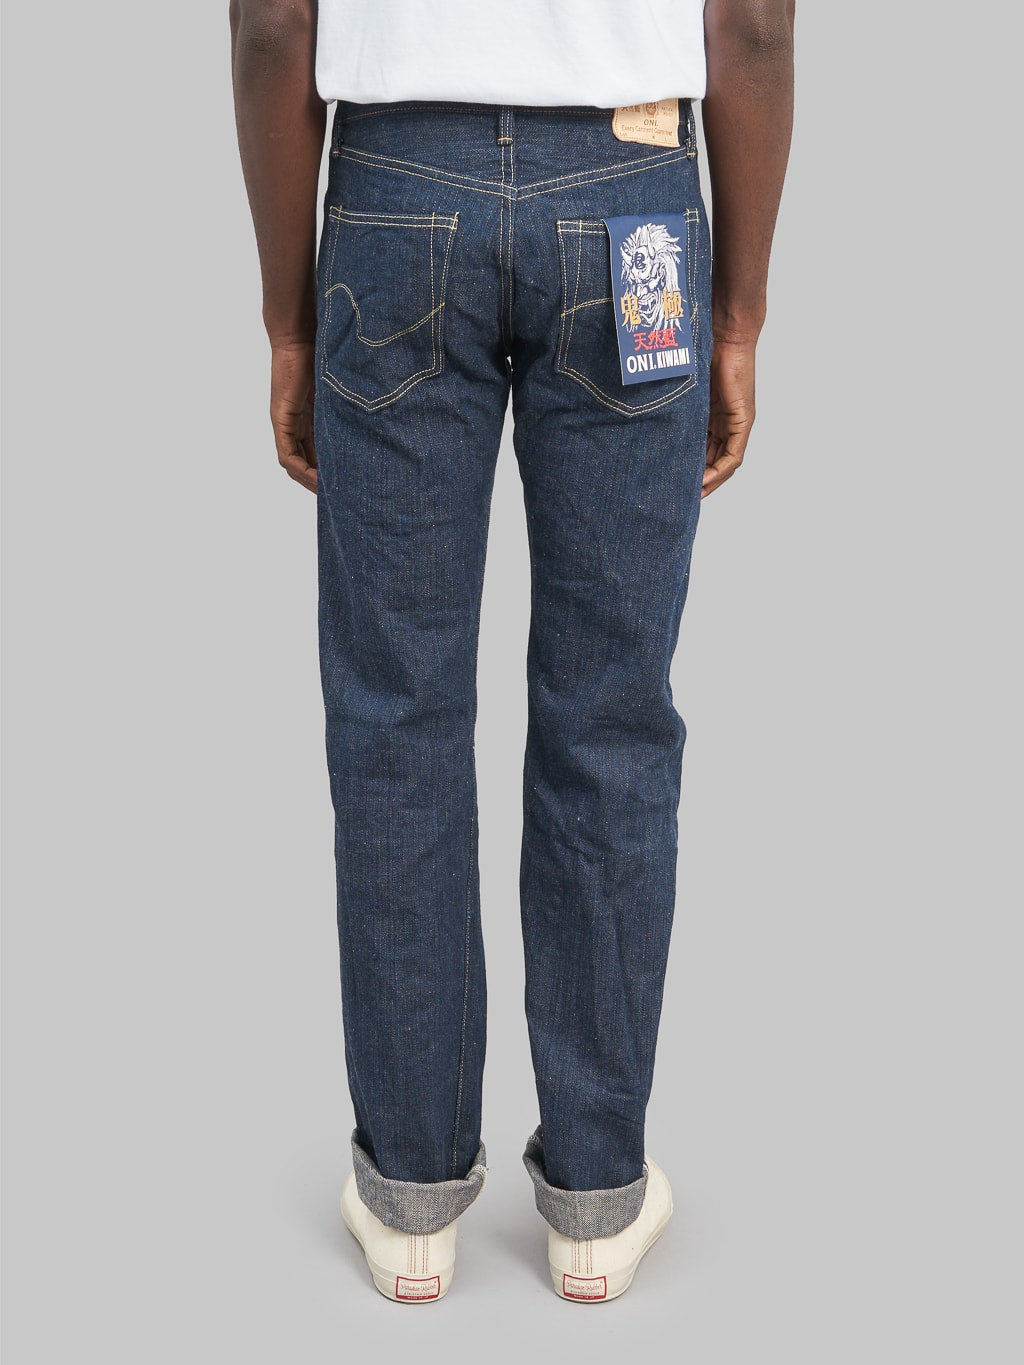 Oni denim kiwami indigo regular selvedge jeans back rise